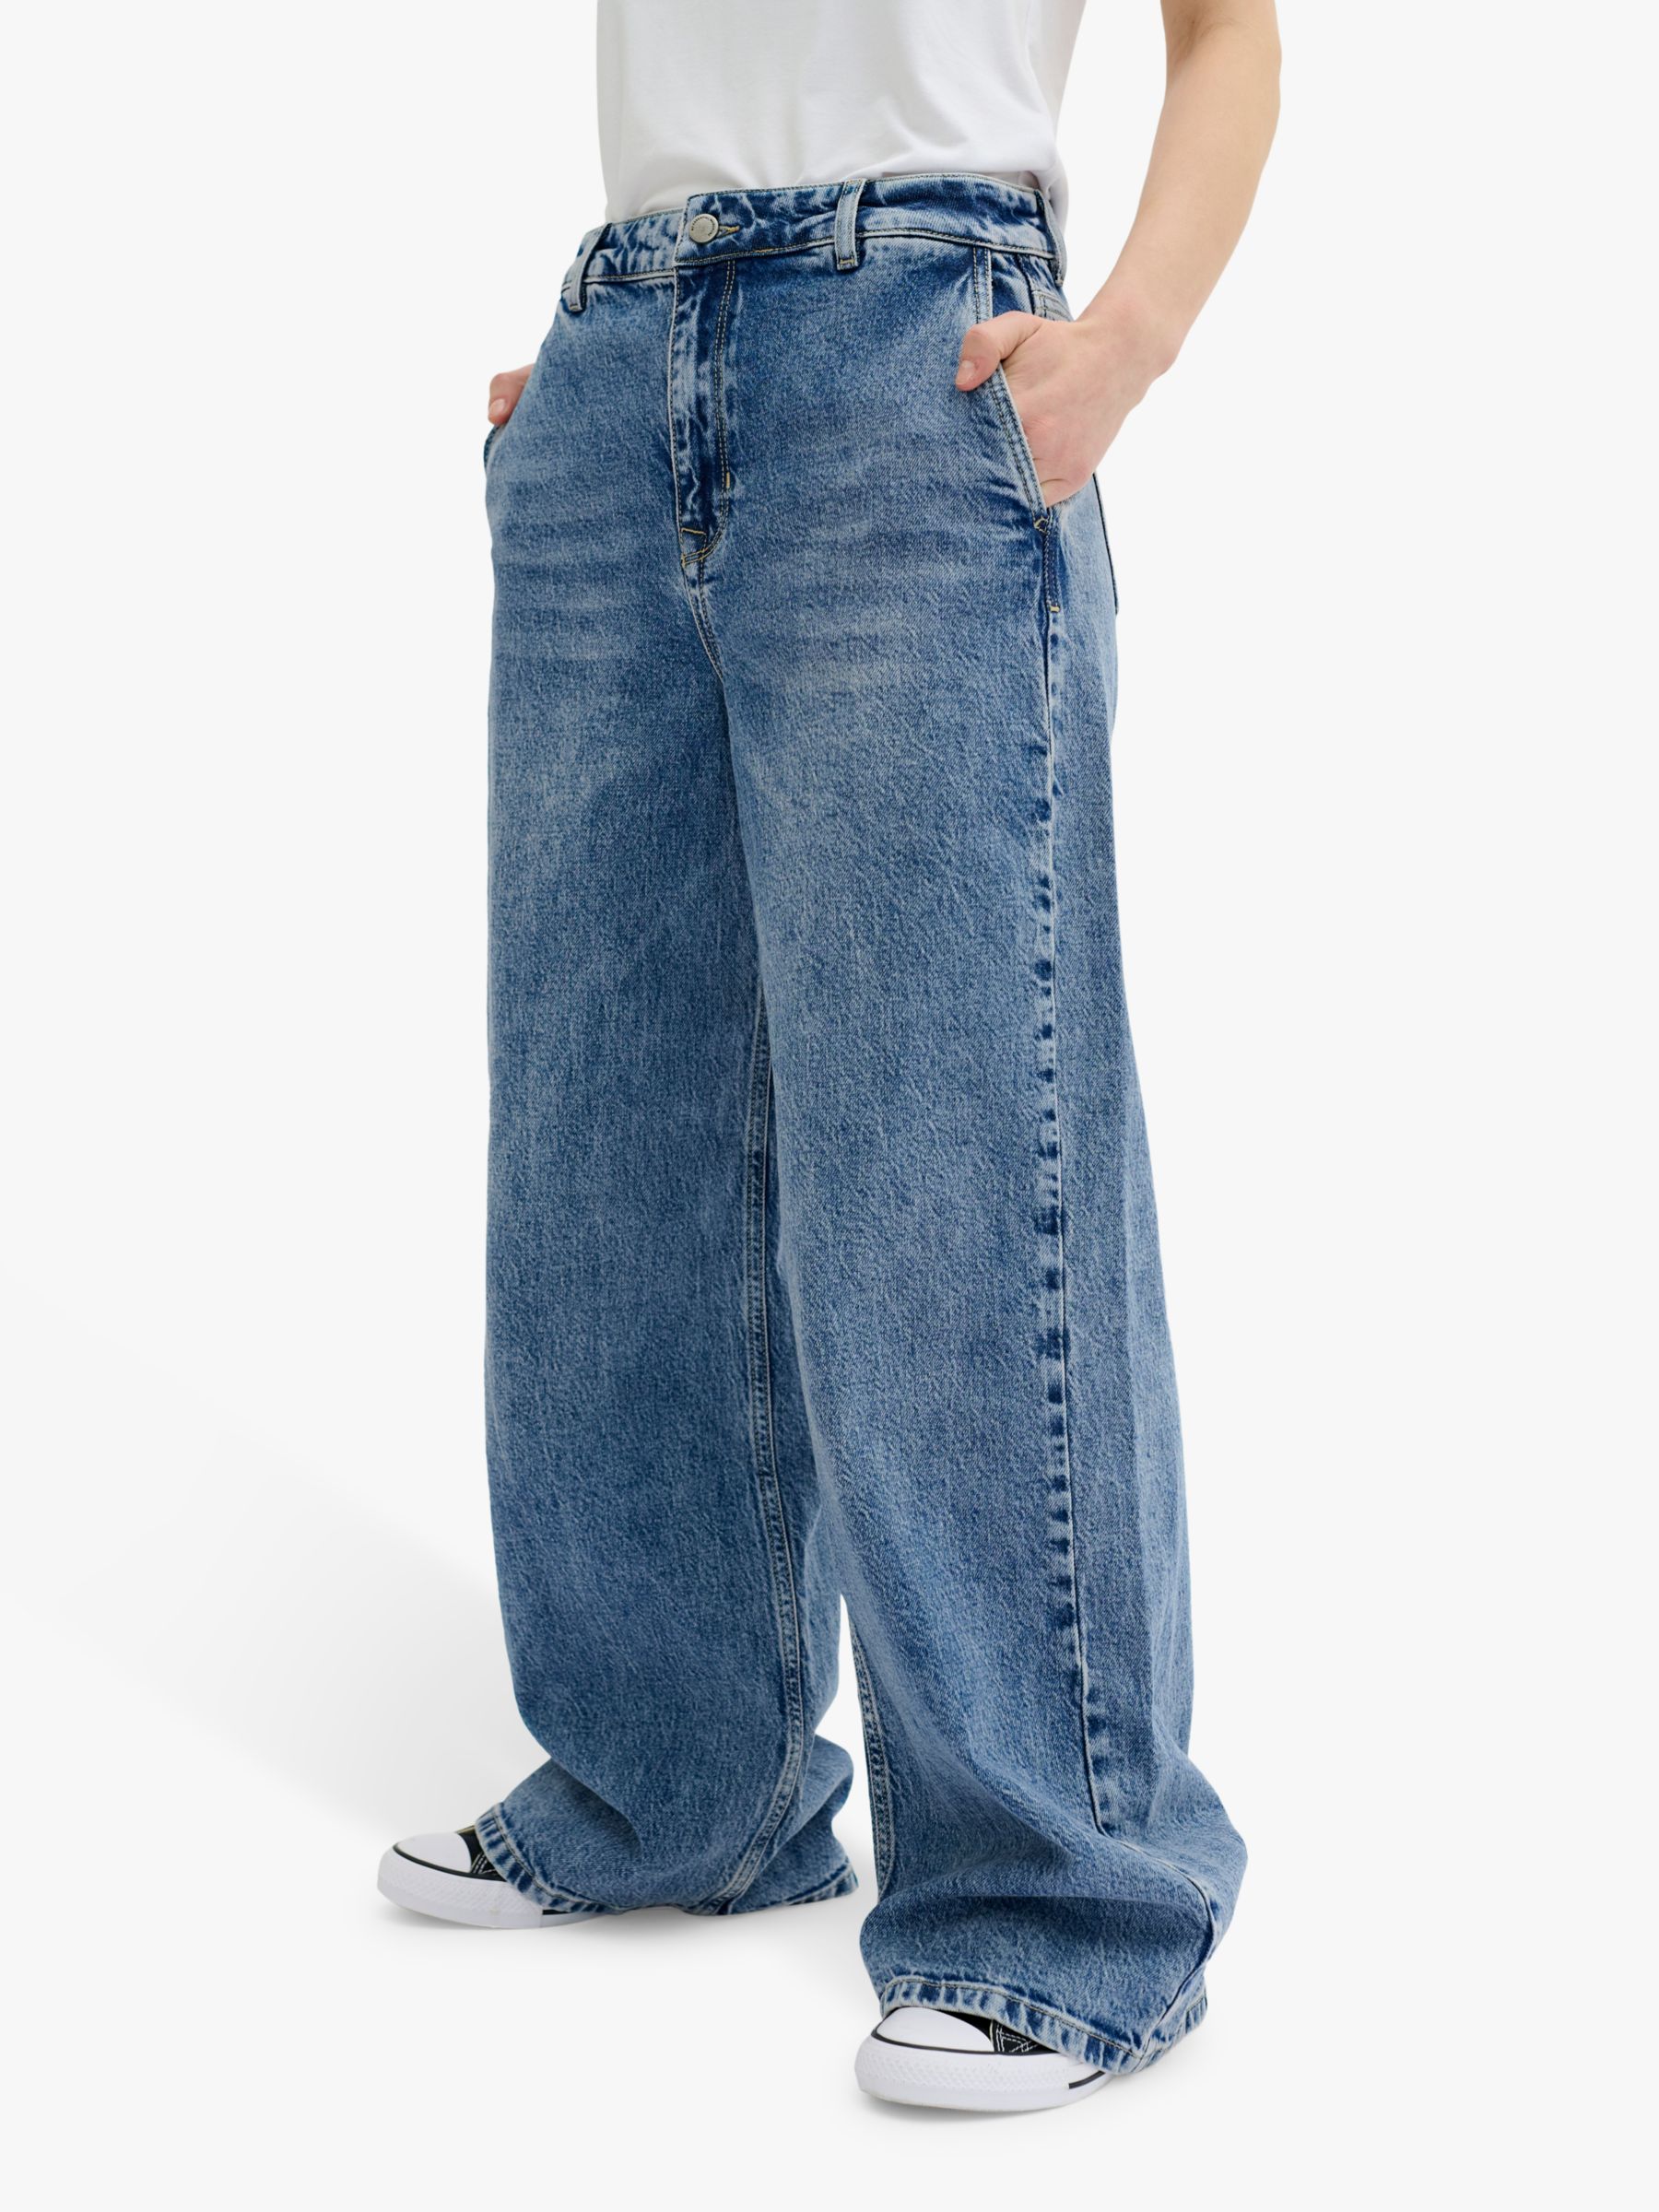 MY ESSENTIAL WARDROBE Tusa Baggy Fit Regular Waist Jeans, Medium Blue Wash, 28R